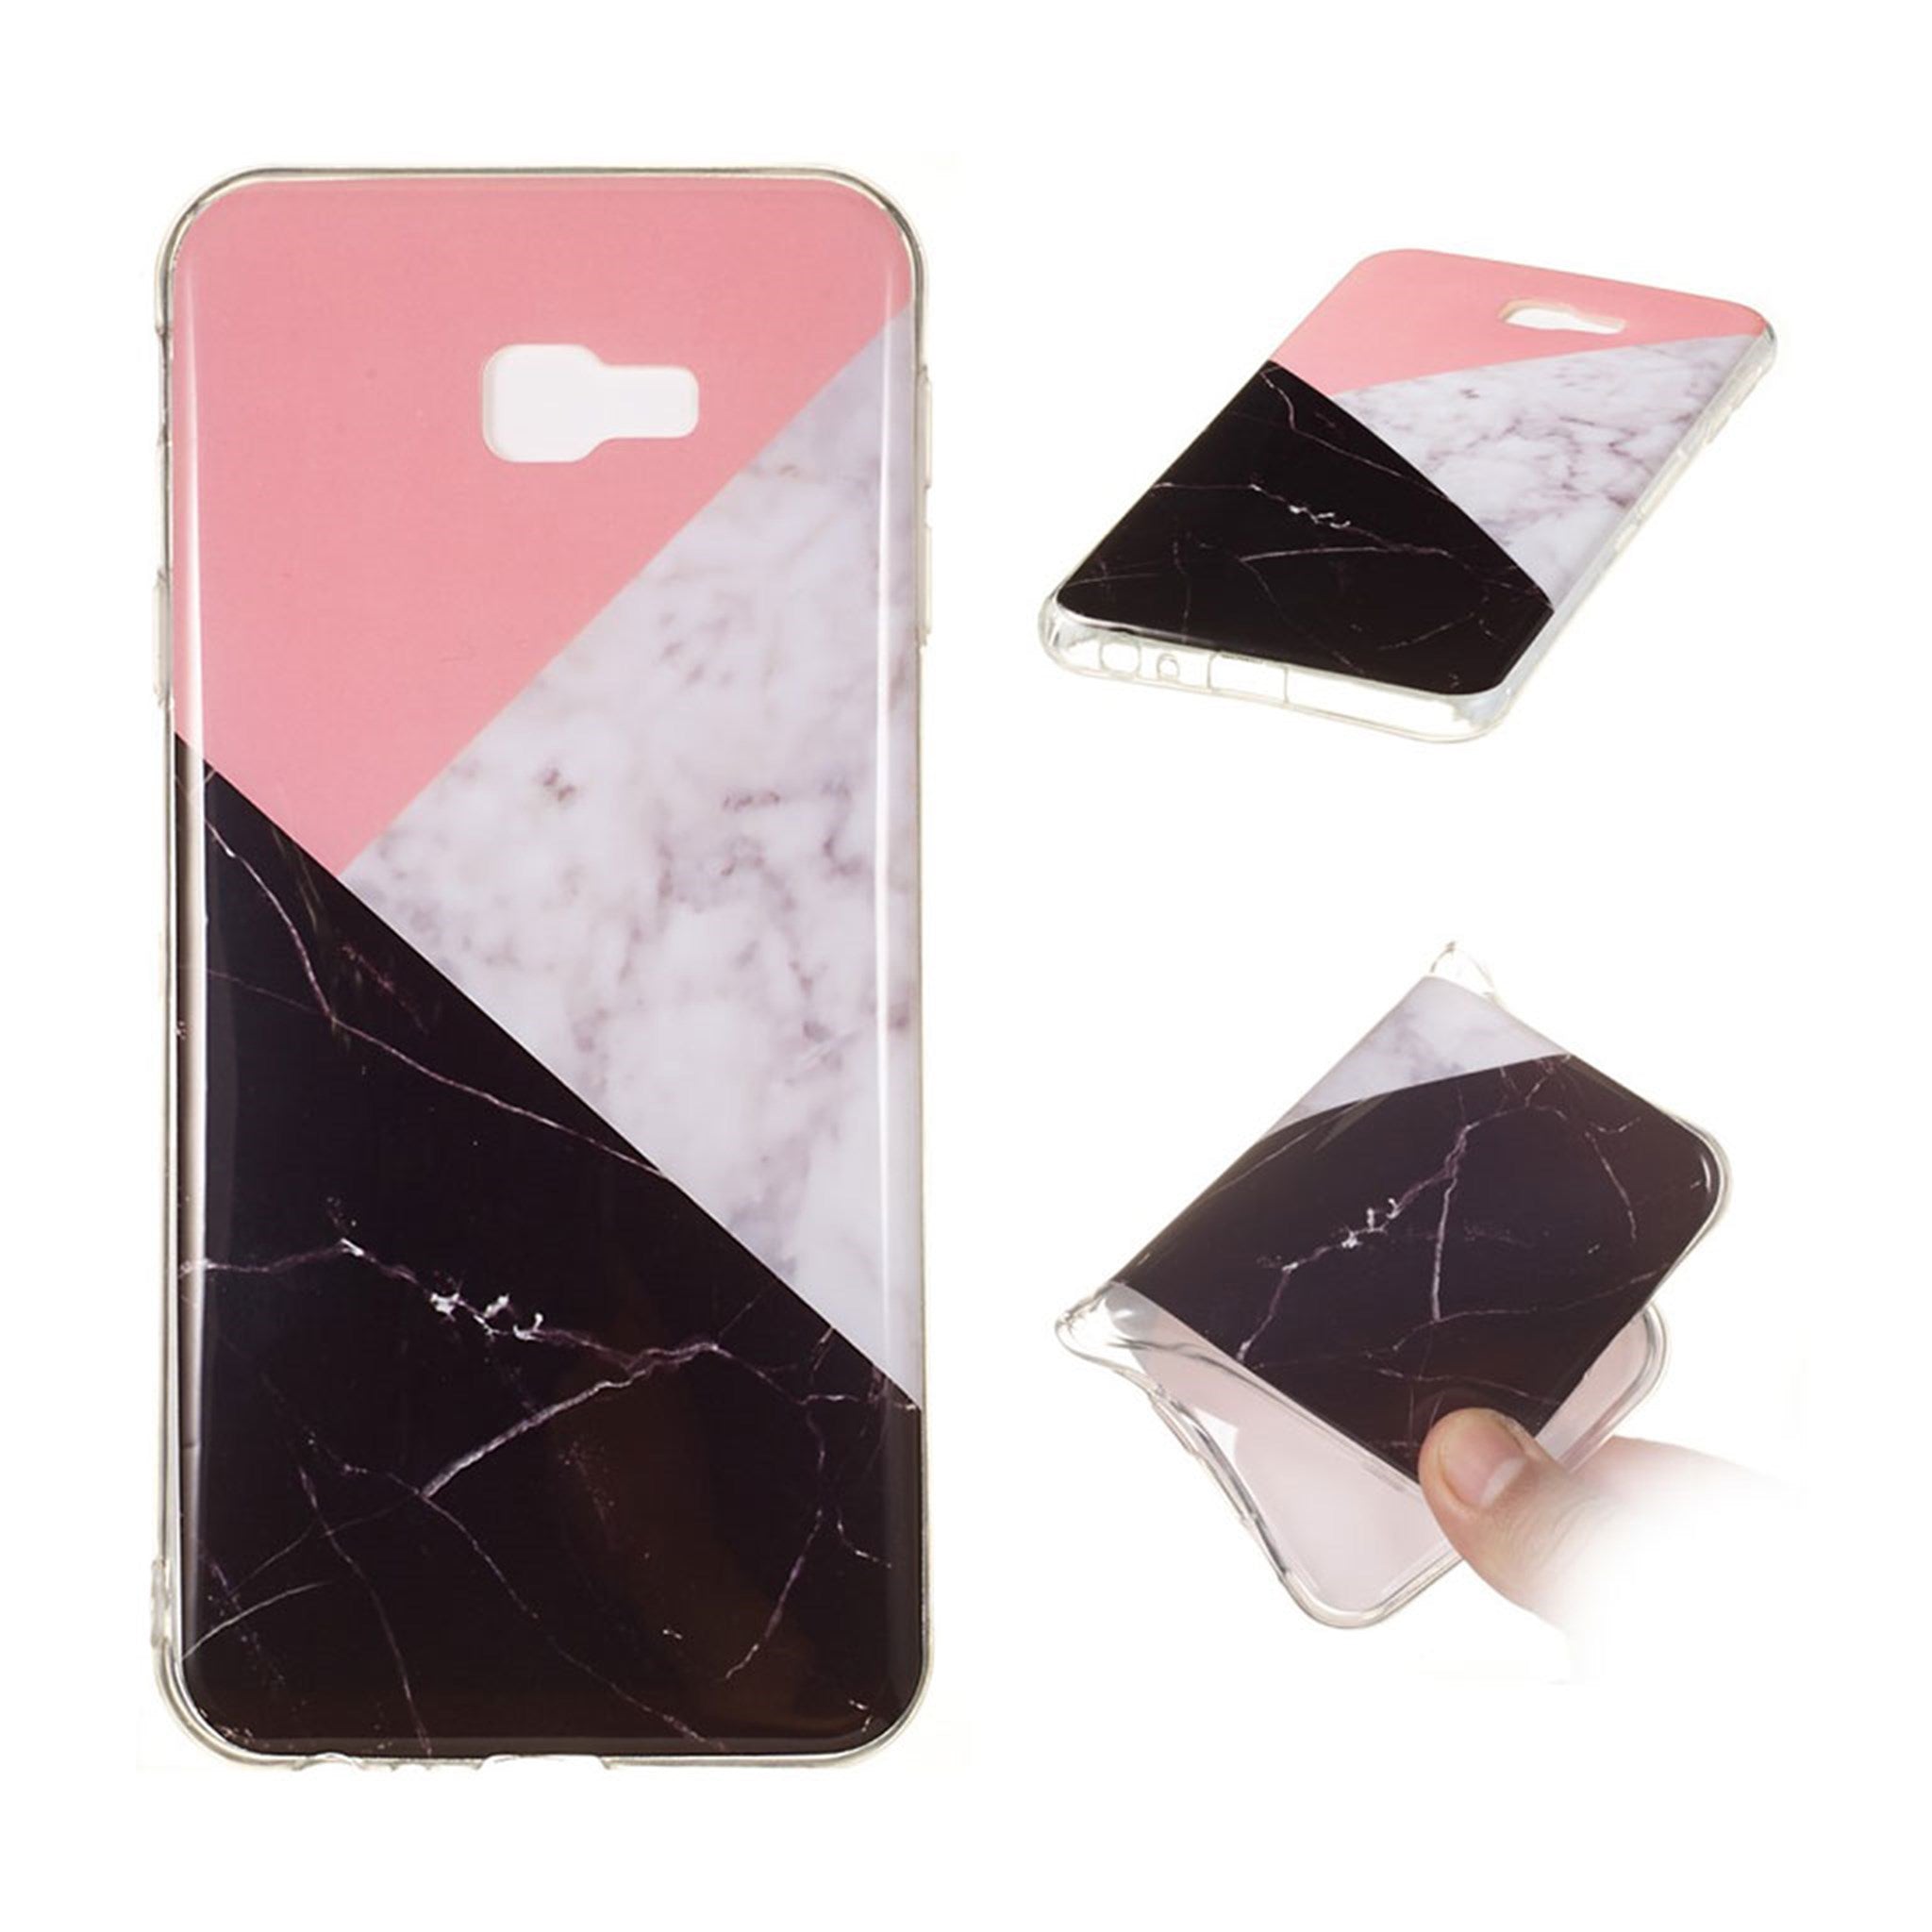 Samsung Galaxy J4 Plus (2018) marble pattern case - Style Q